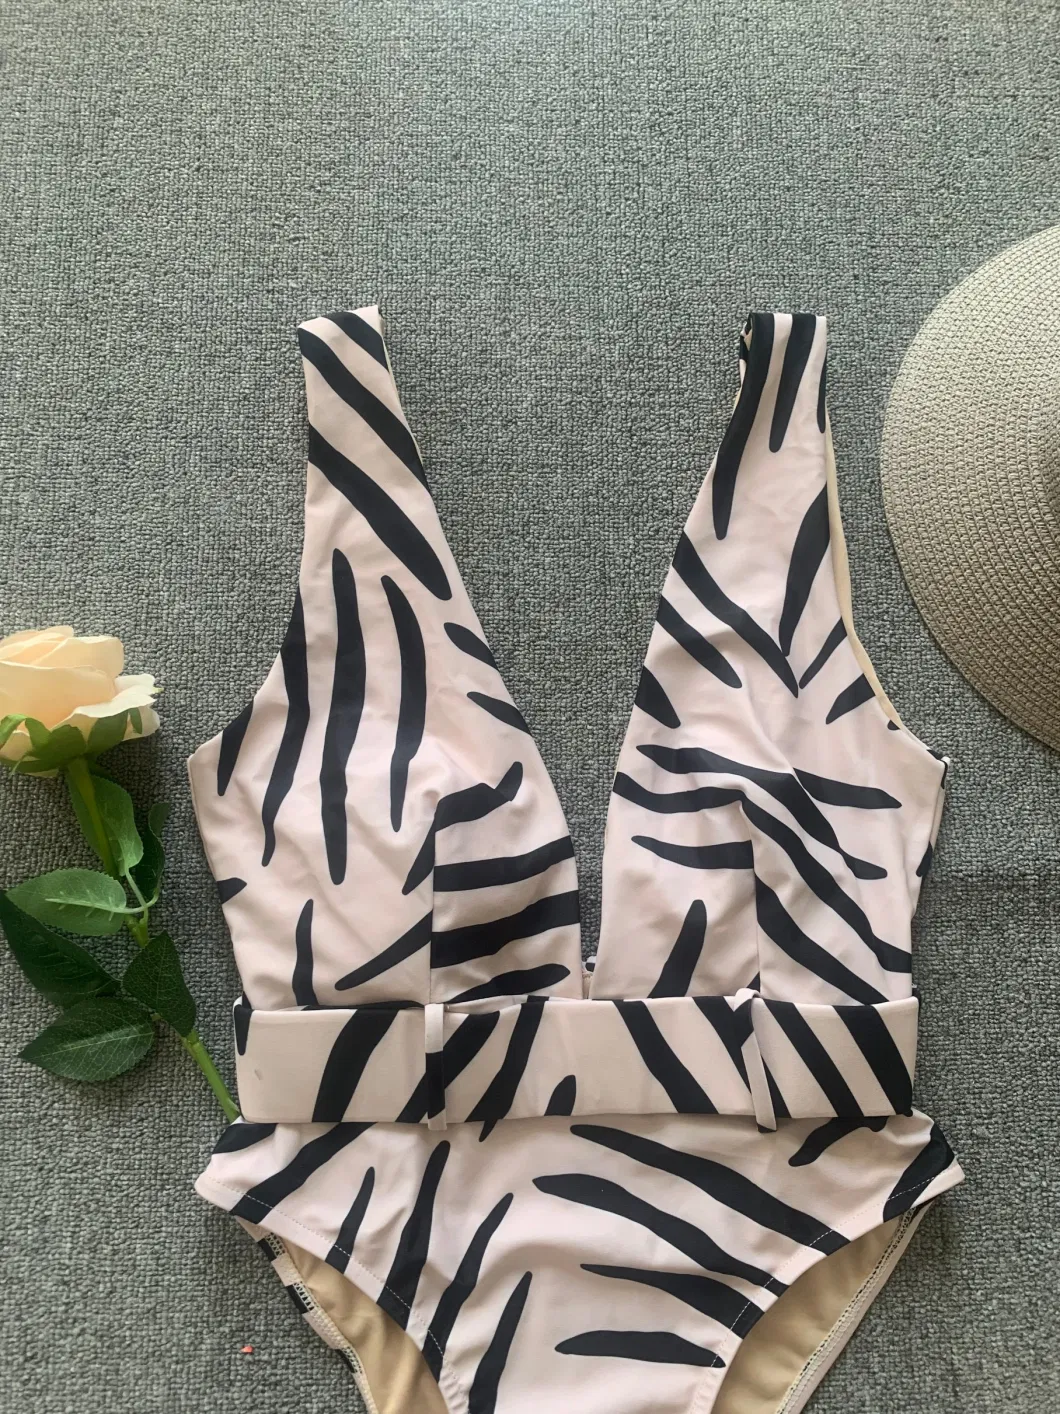 Hot Selling Women Backless Deep V Zebra Print Swimwear